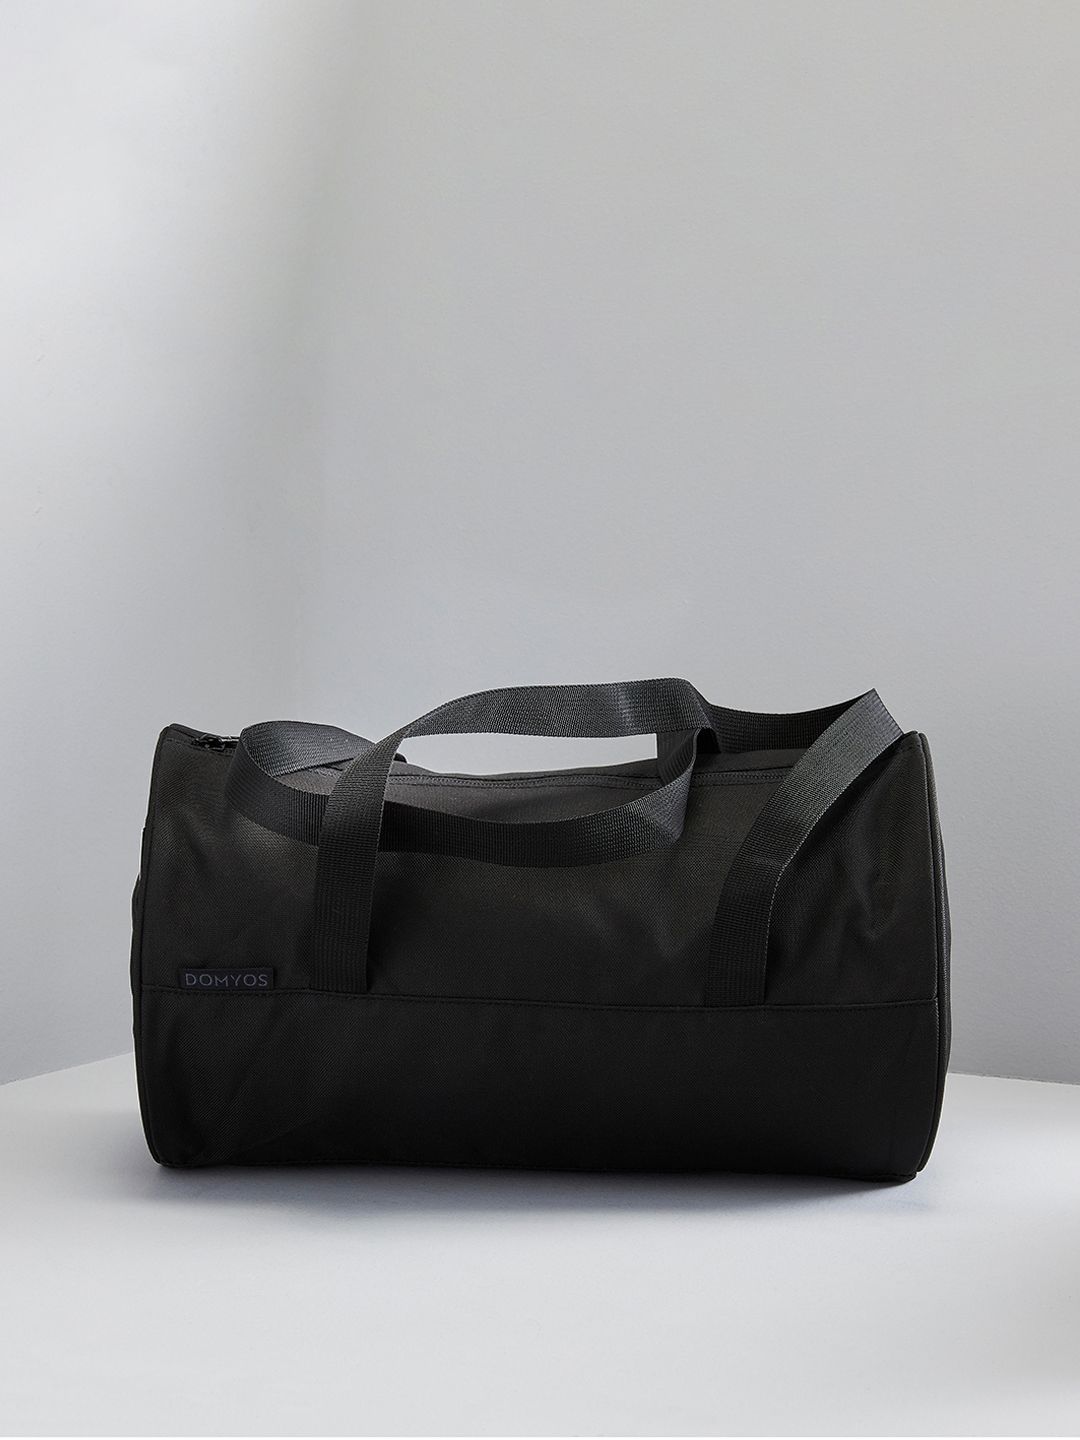 Domyos by Decathlon Unisex Black Fitness 15L Barrel Shape Duffle Bag Price in India